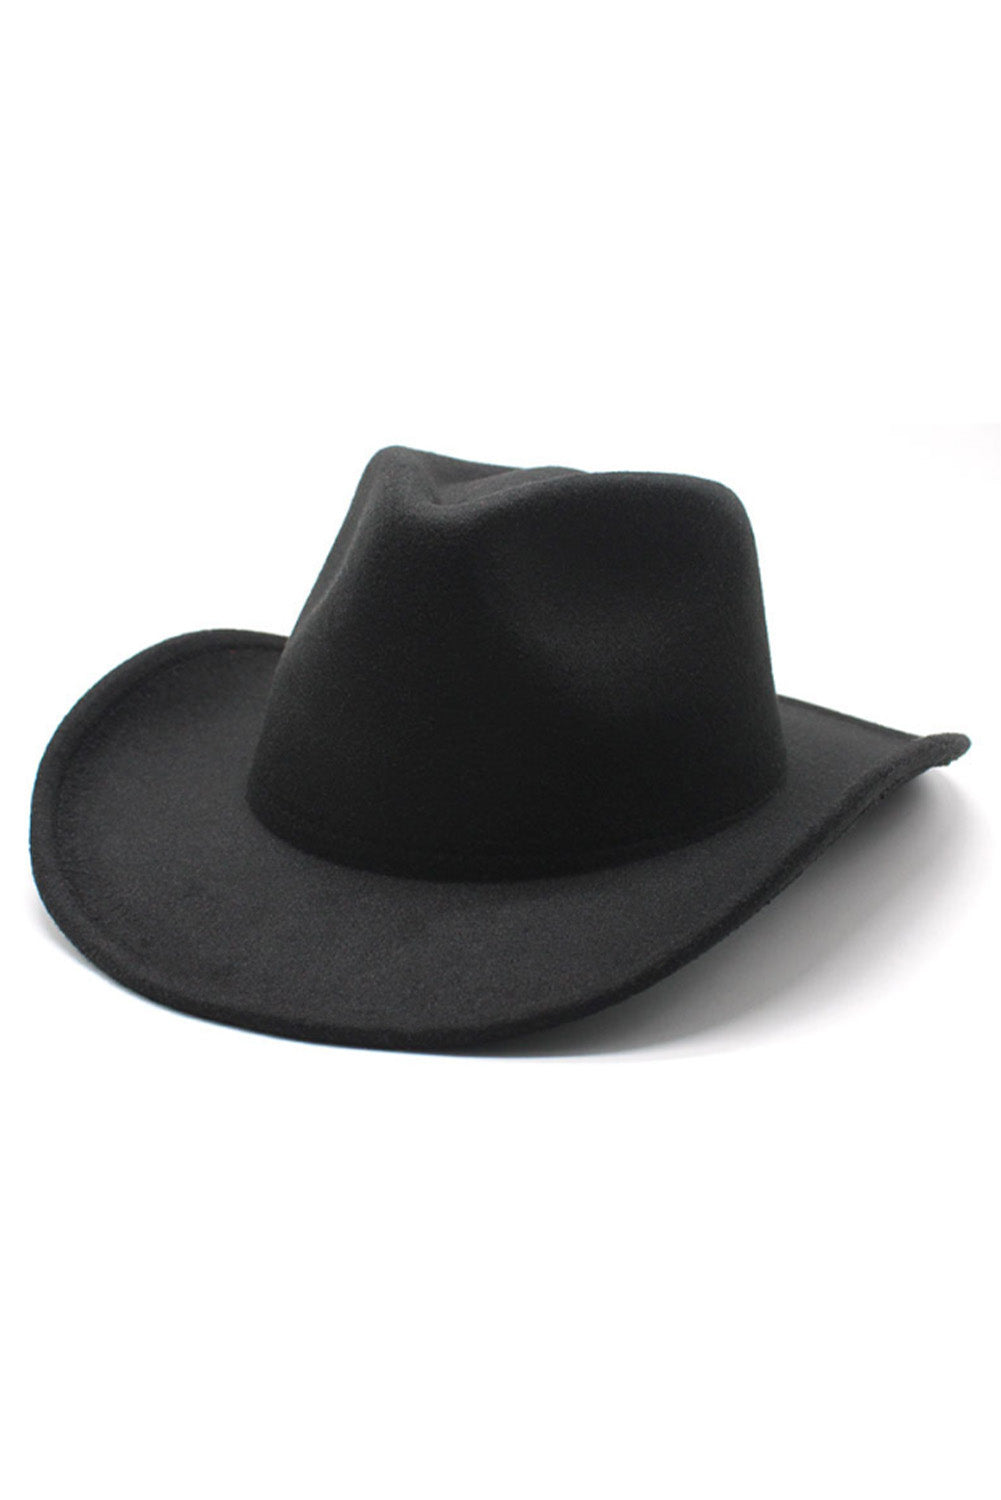 Black Western Cowboy Wide Brim Hat Hats & Caps JT's Designer Fashion